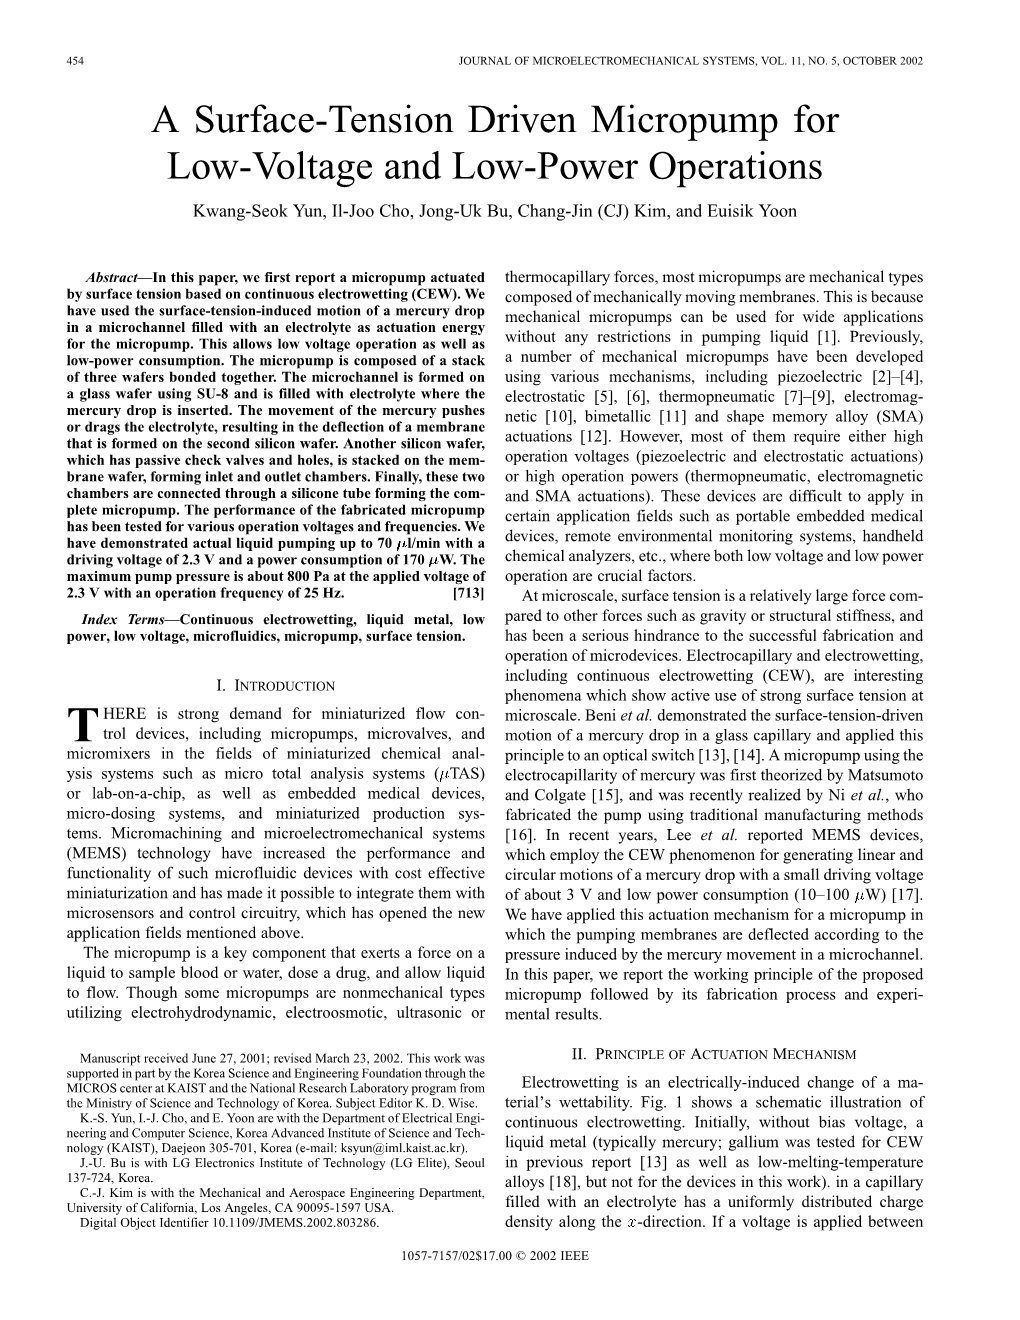 A Surface-Tension Driven Micropump for Low-Voltage and Low-Power Operations Kwang-Seok Yun, Il-Joo Cho, Jong-Uk Bu, Chang-Jin (CJ) Kim, and Euisik Yoon